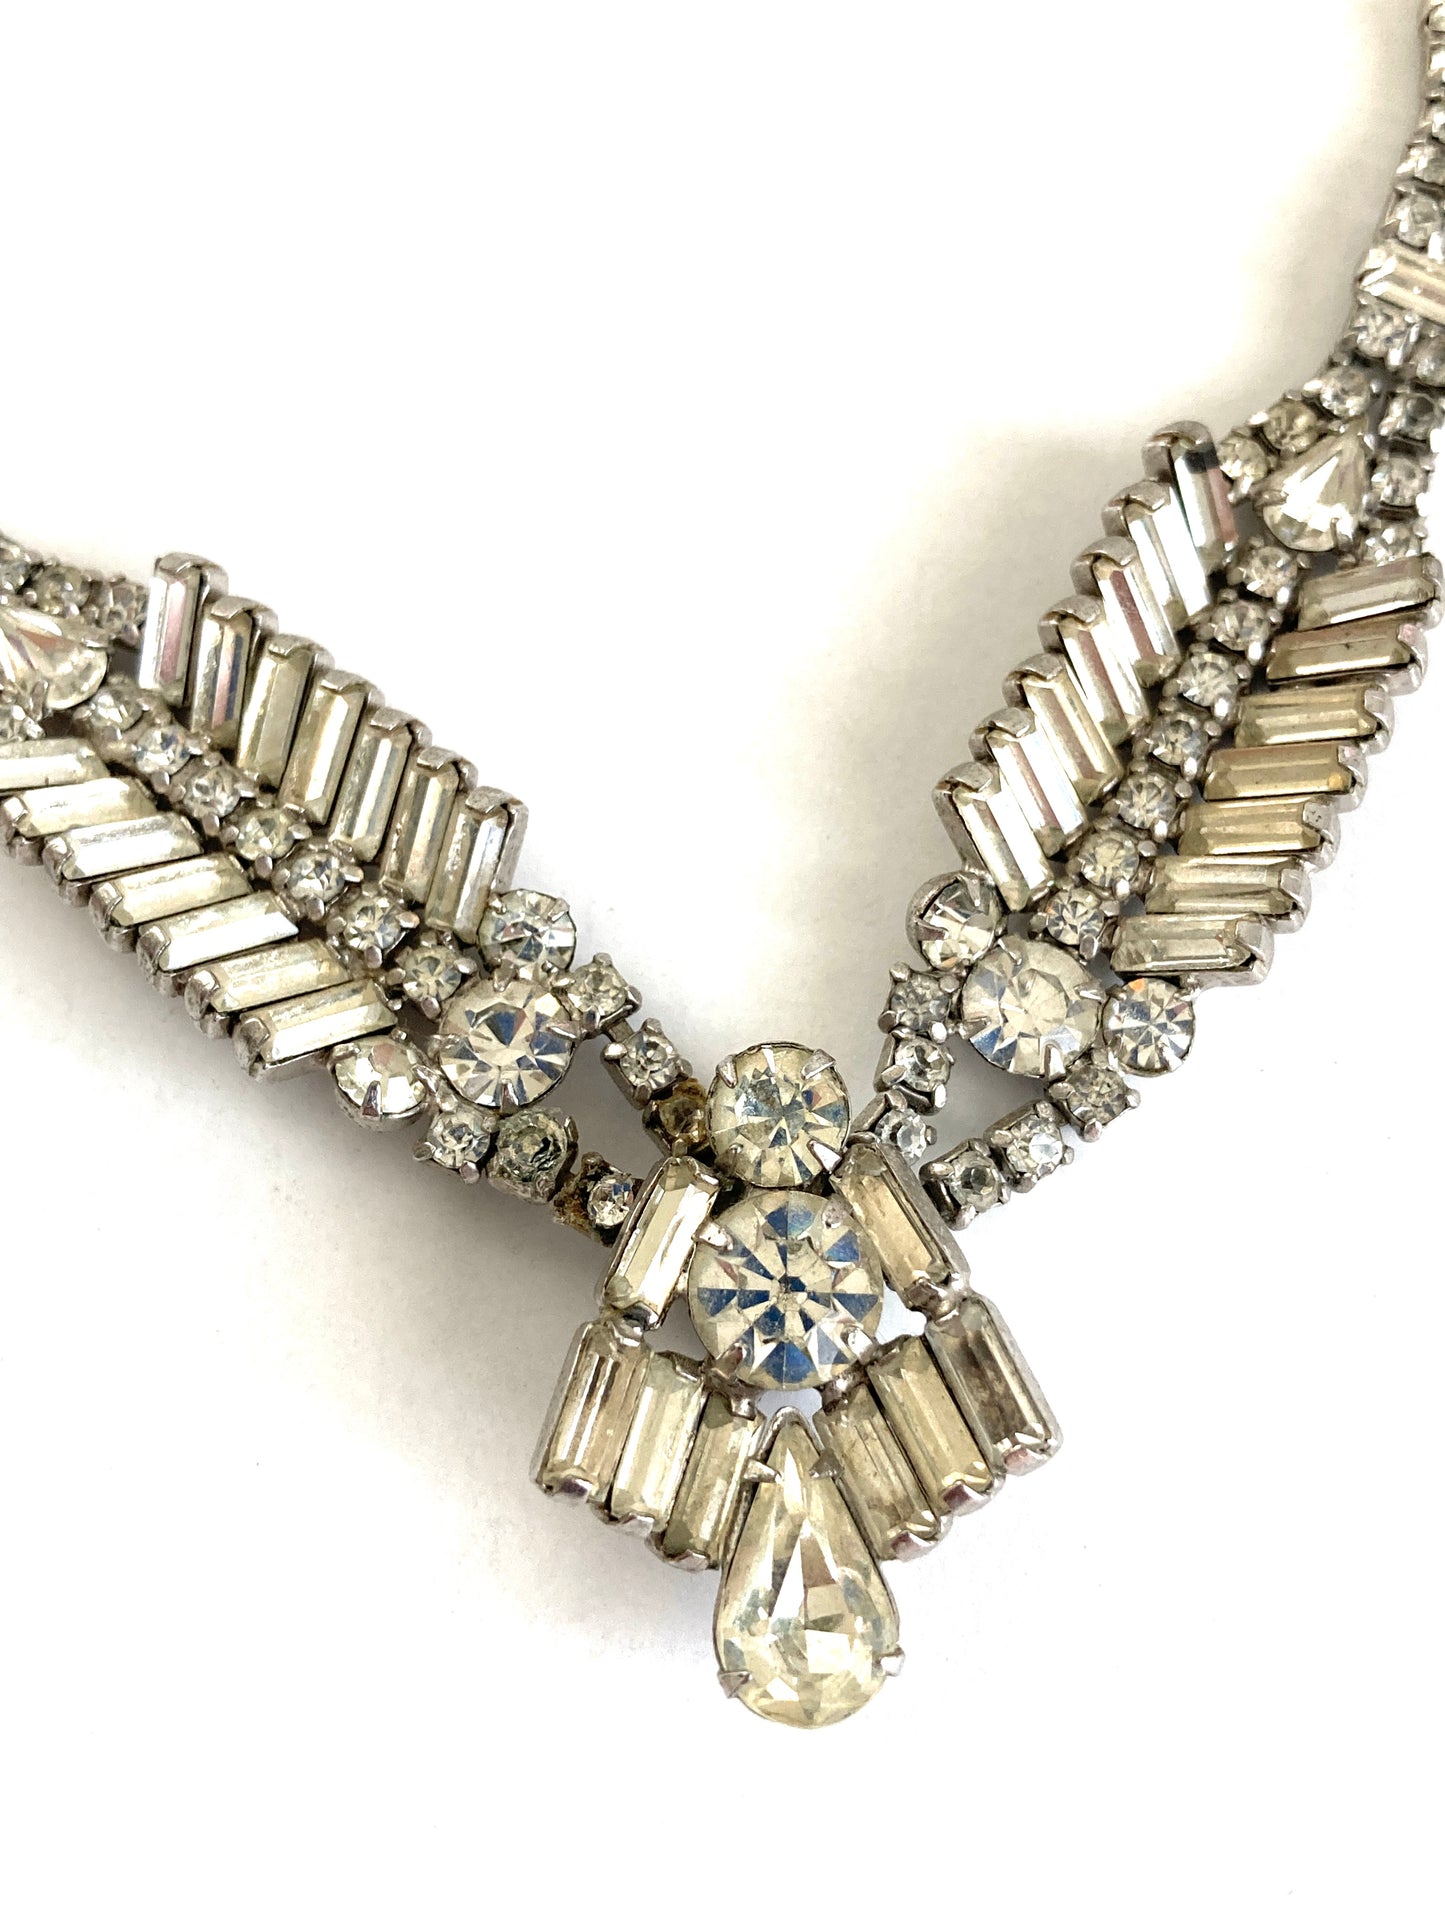 Vintage 1940s Baguette Rhinestone Necklace